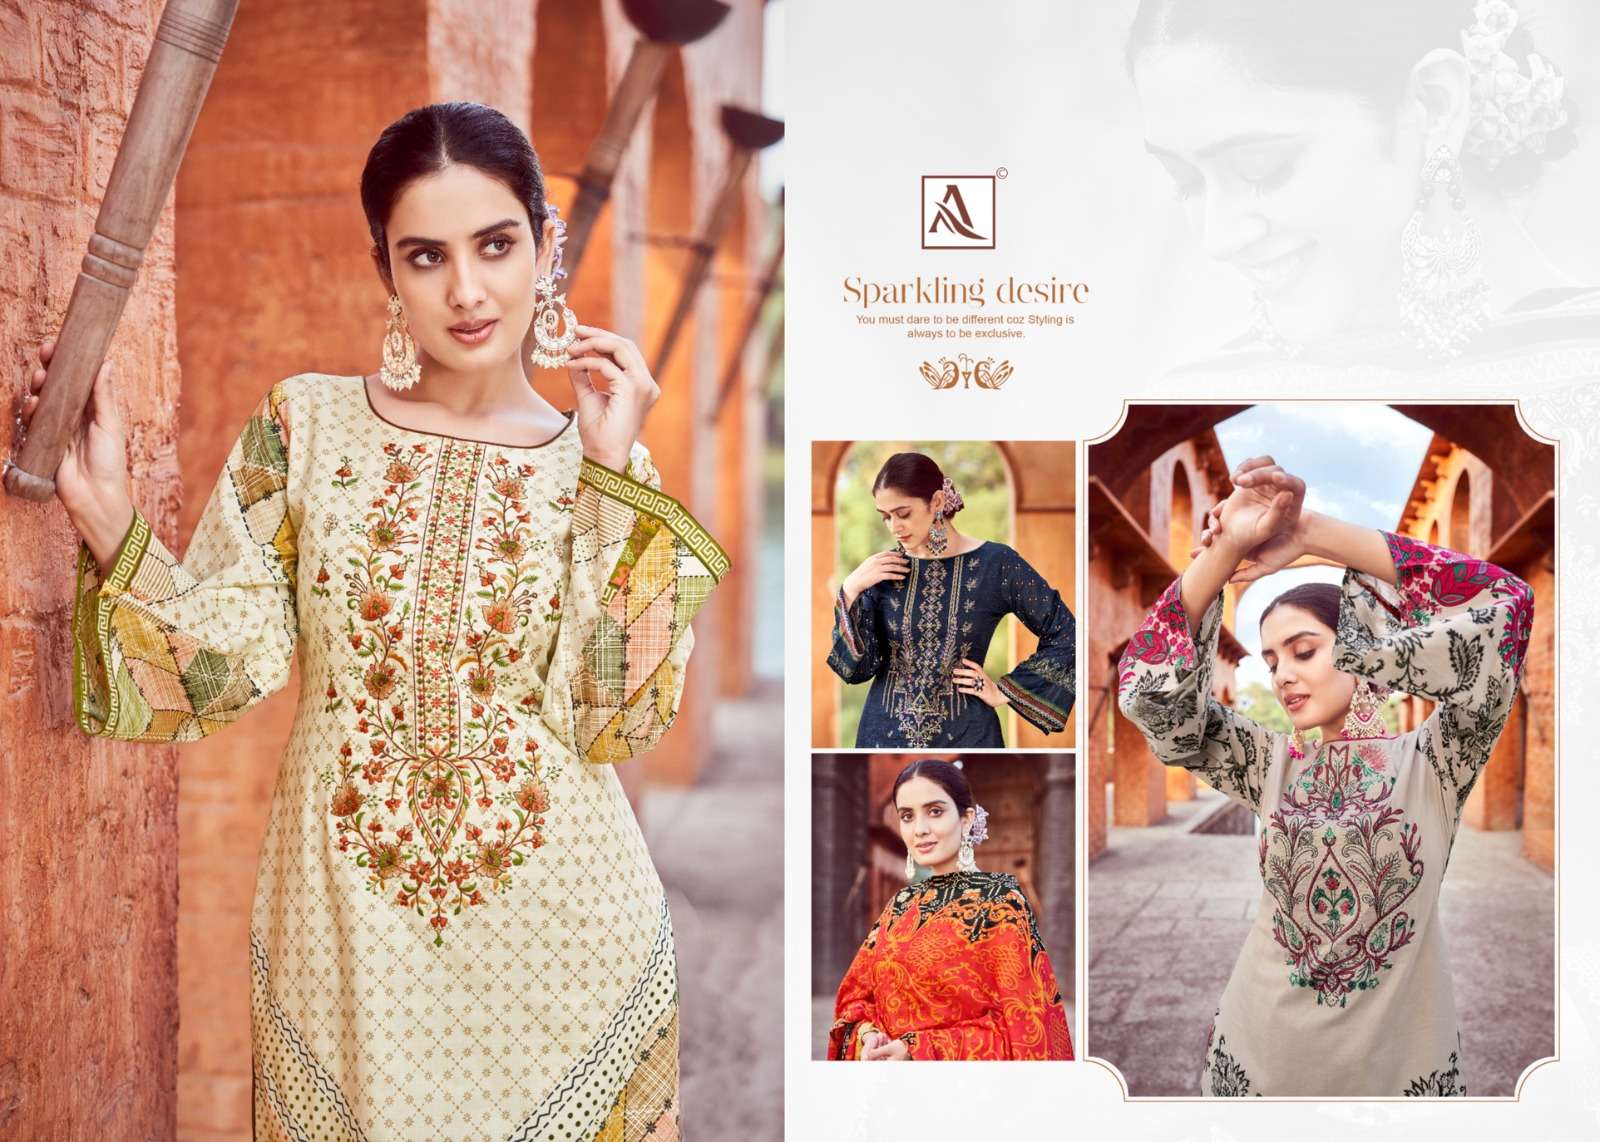 alok suit gulshan ara cambric new and modern look salwar suit catalog